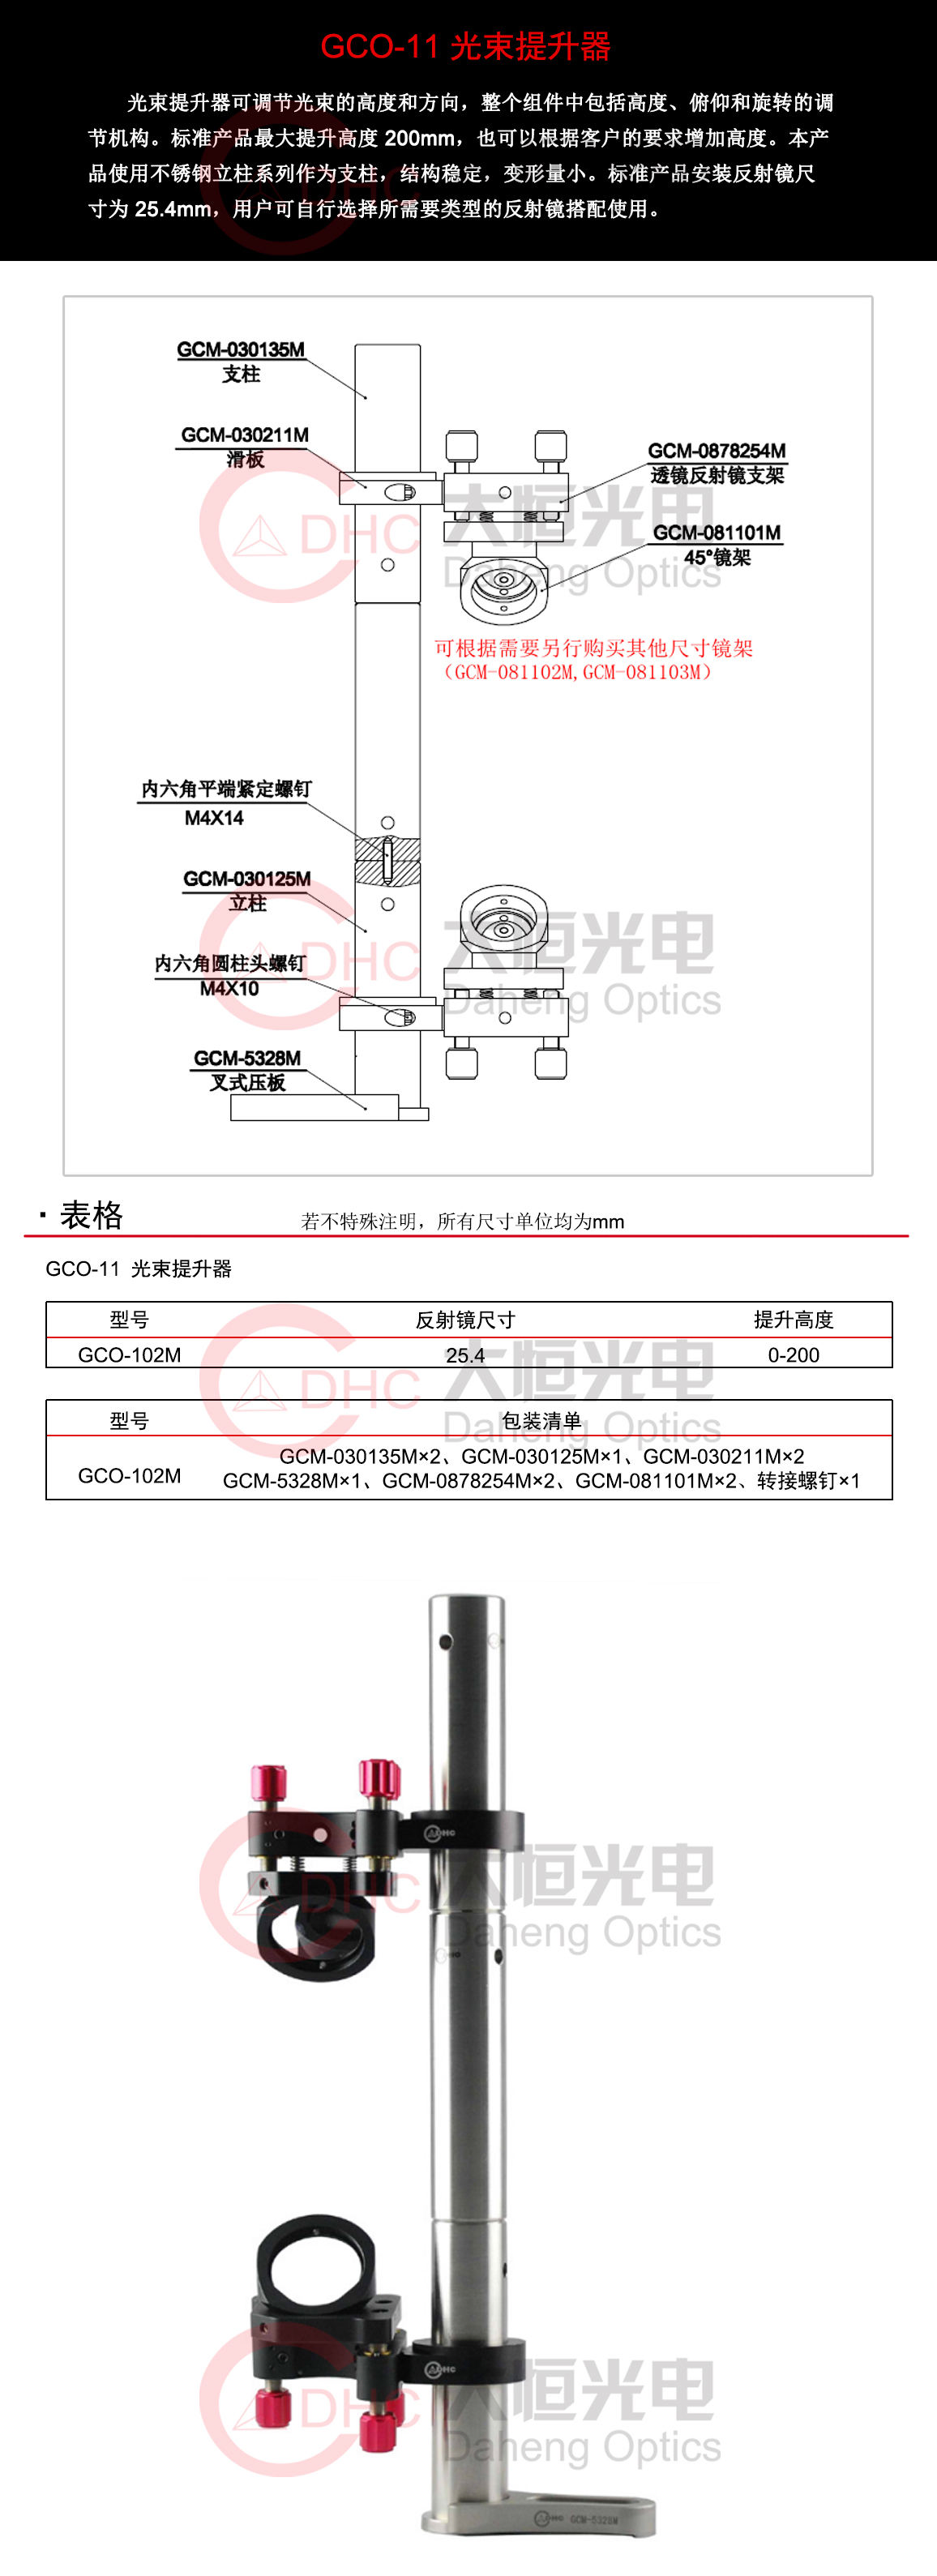 GCO-1102M光束提升器+水印.jpg